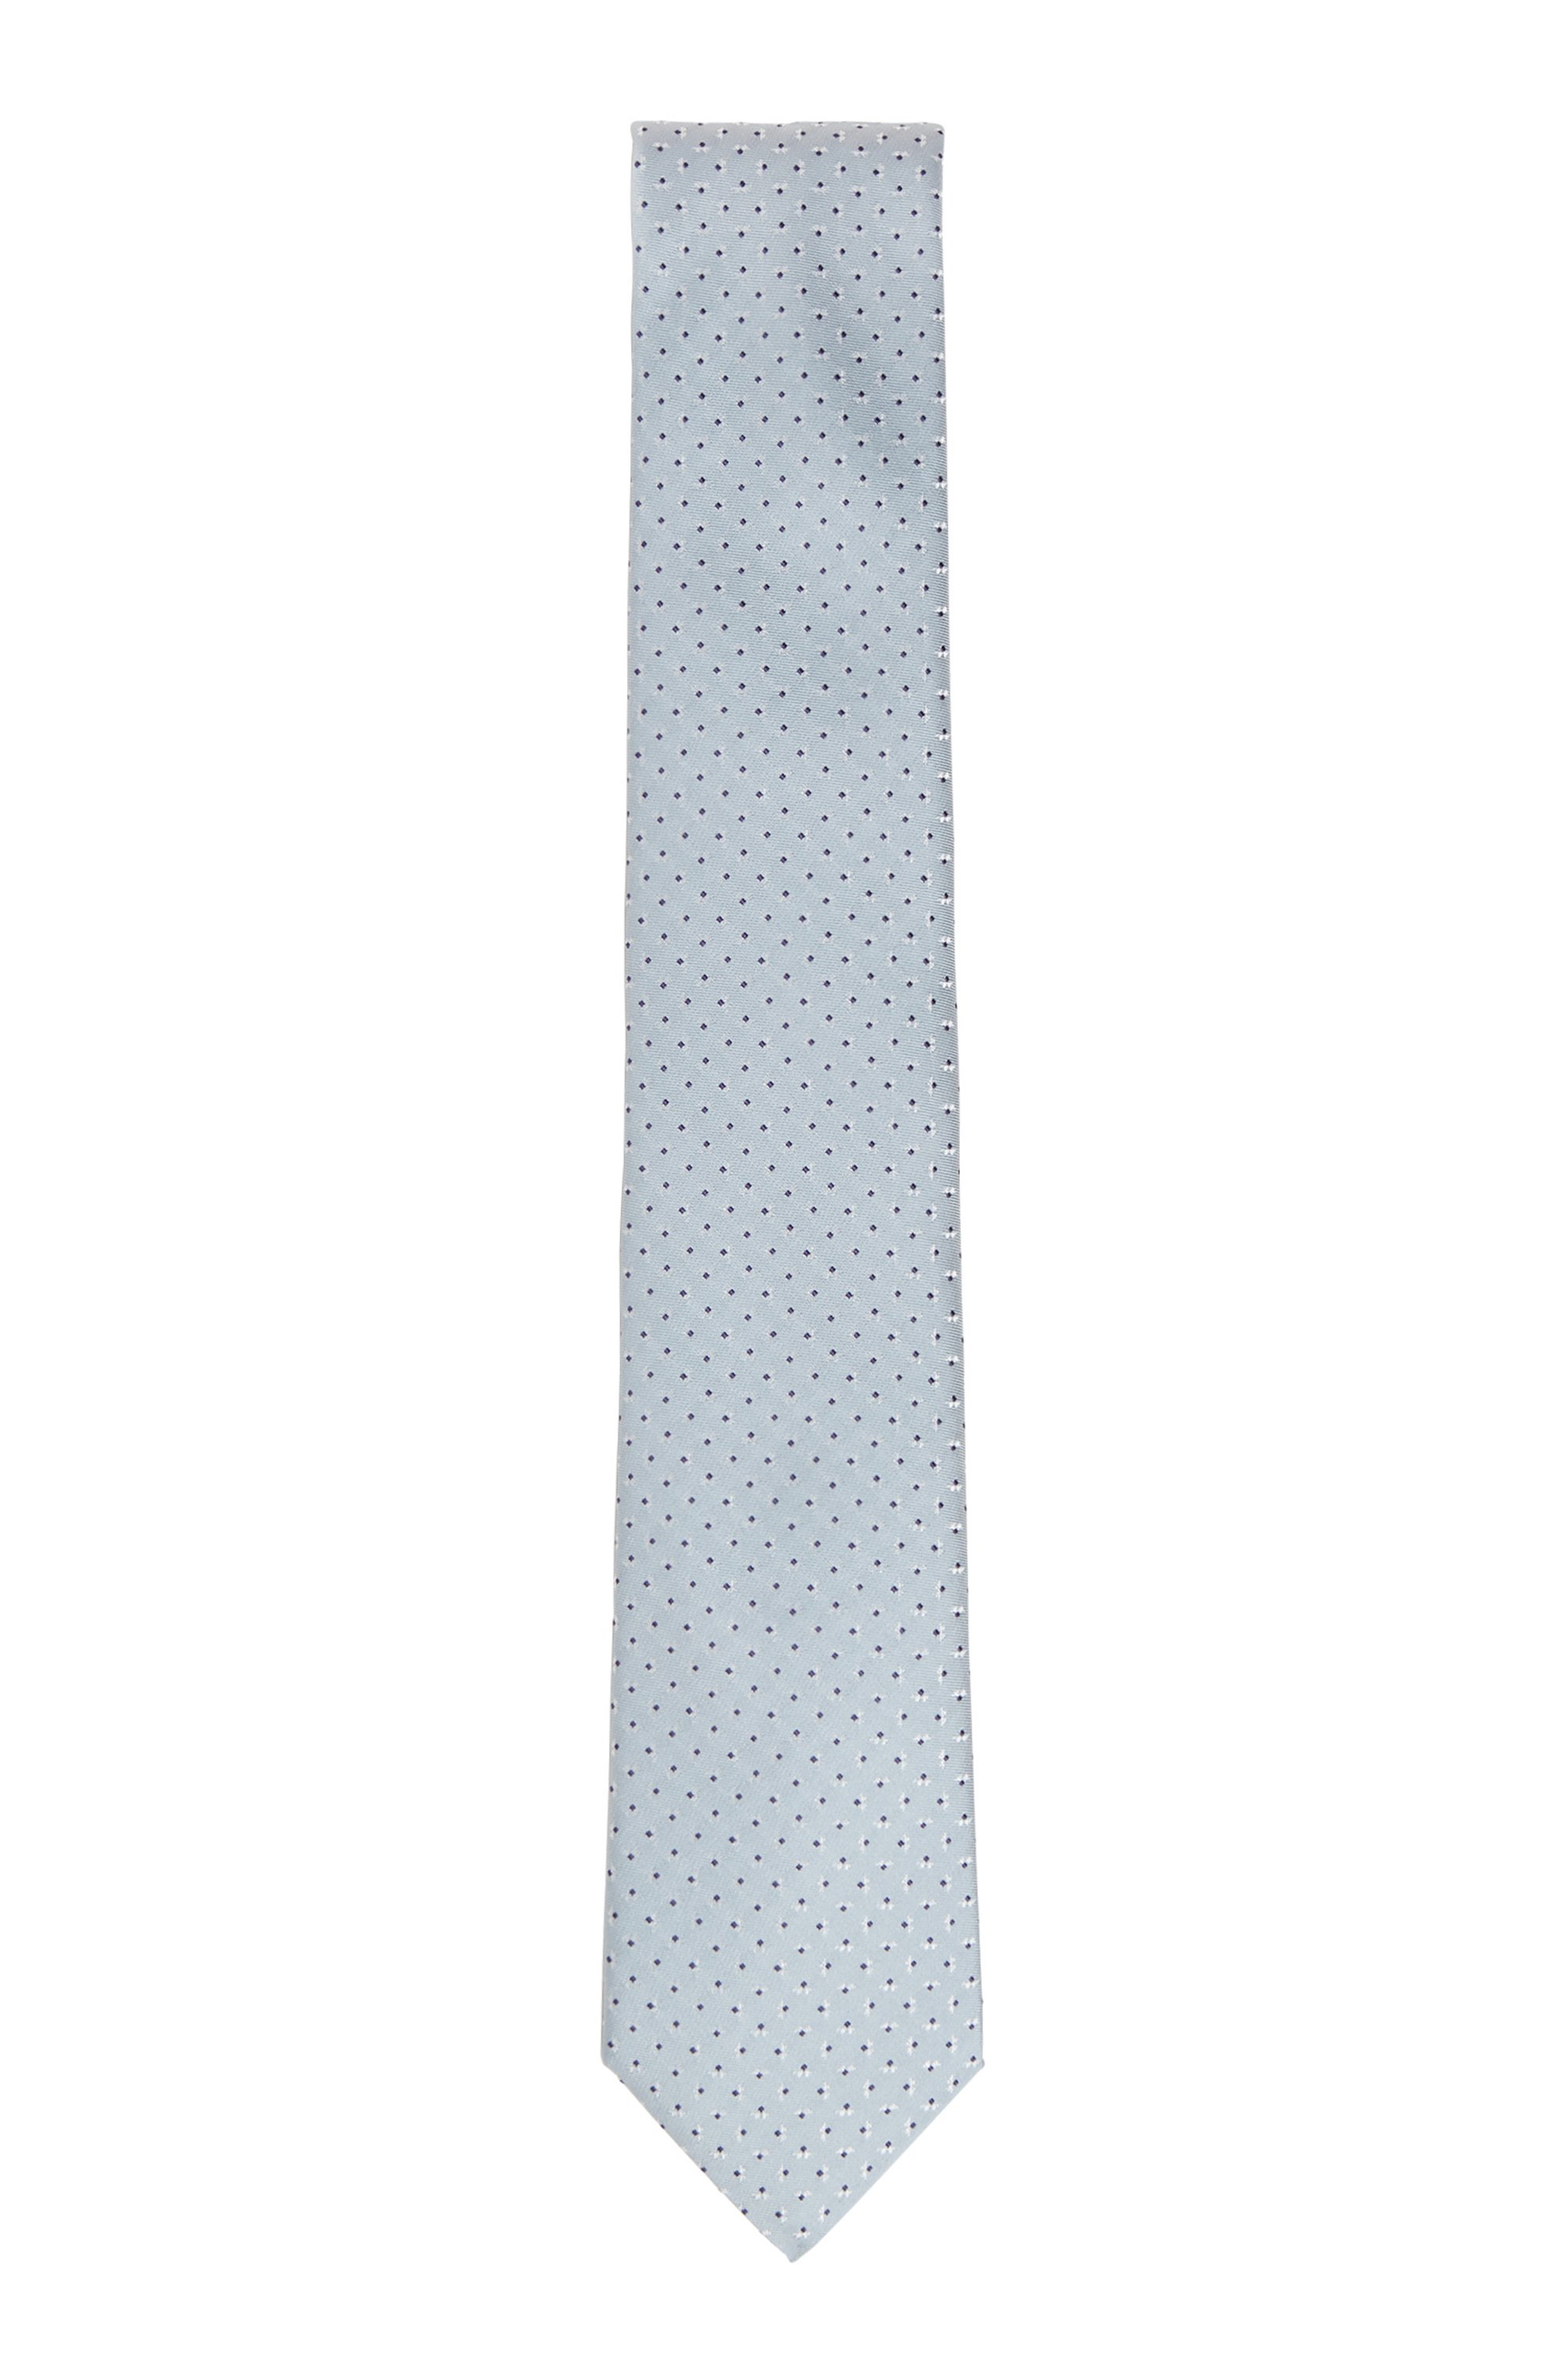 Jacquard-patterned tie in water-repellent silk, Grey